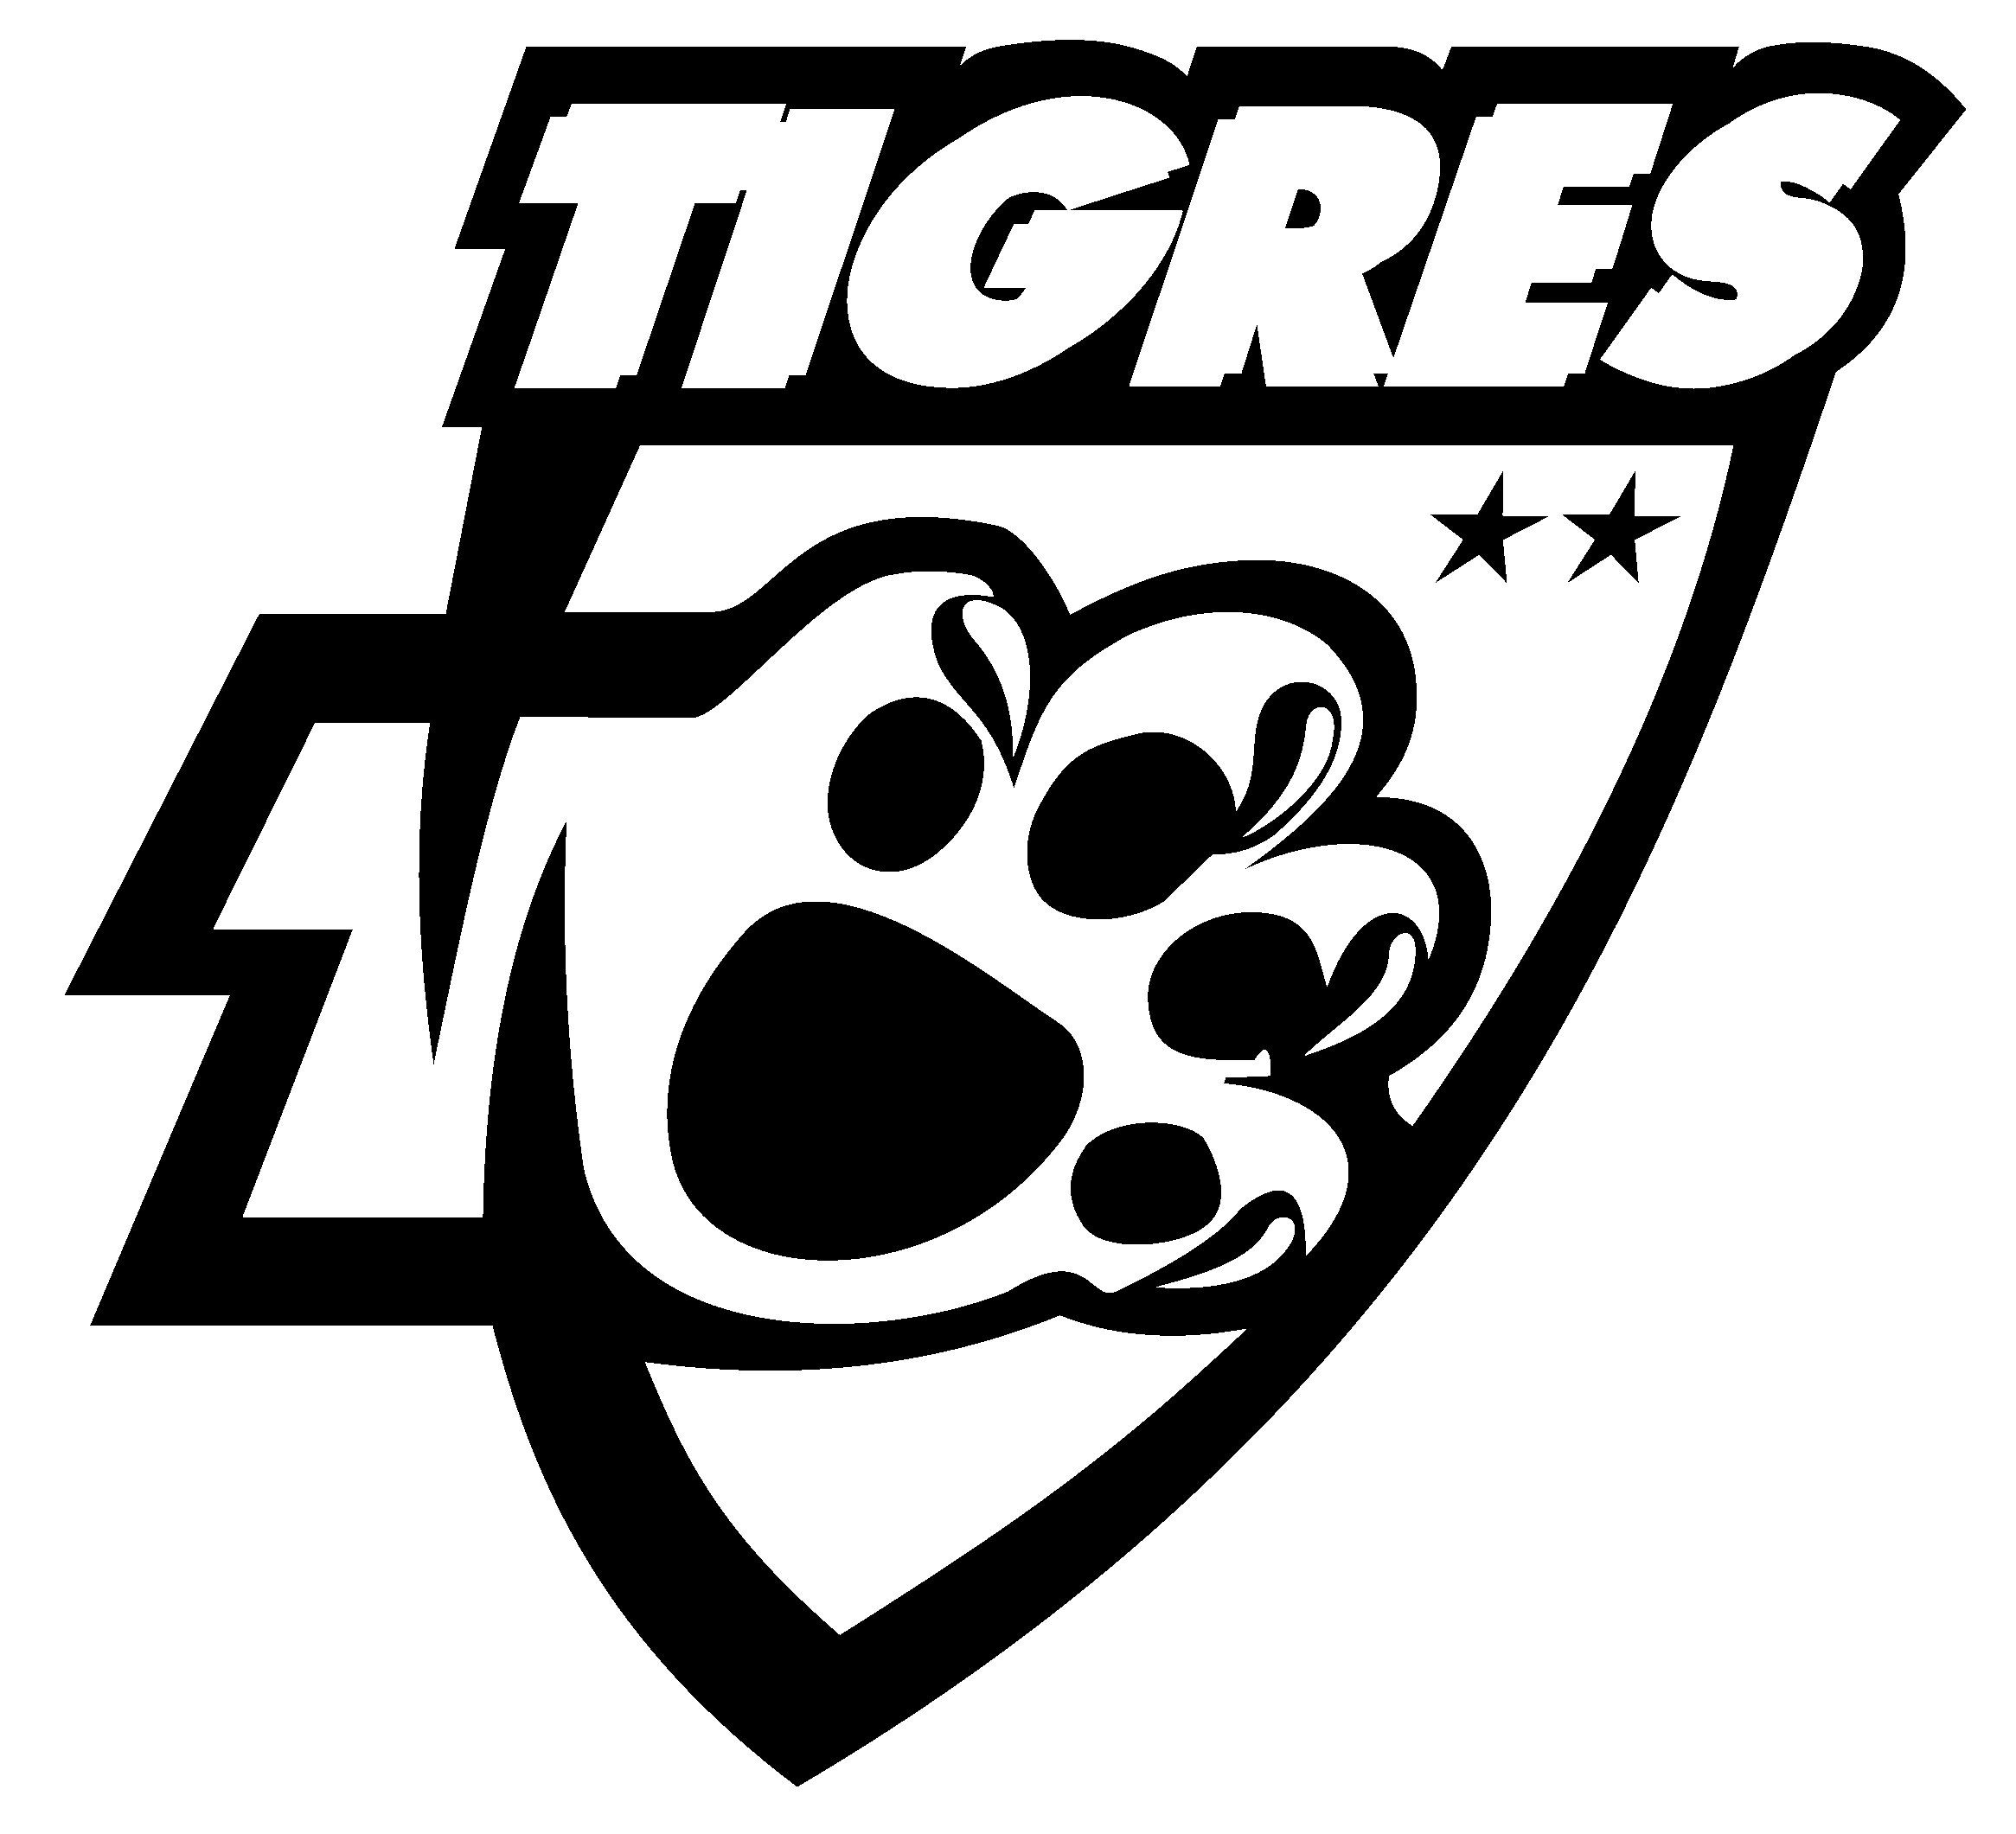 Download Tigres De La Uanl 2 Logo Black And White - Tigres Uanl Logos